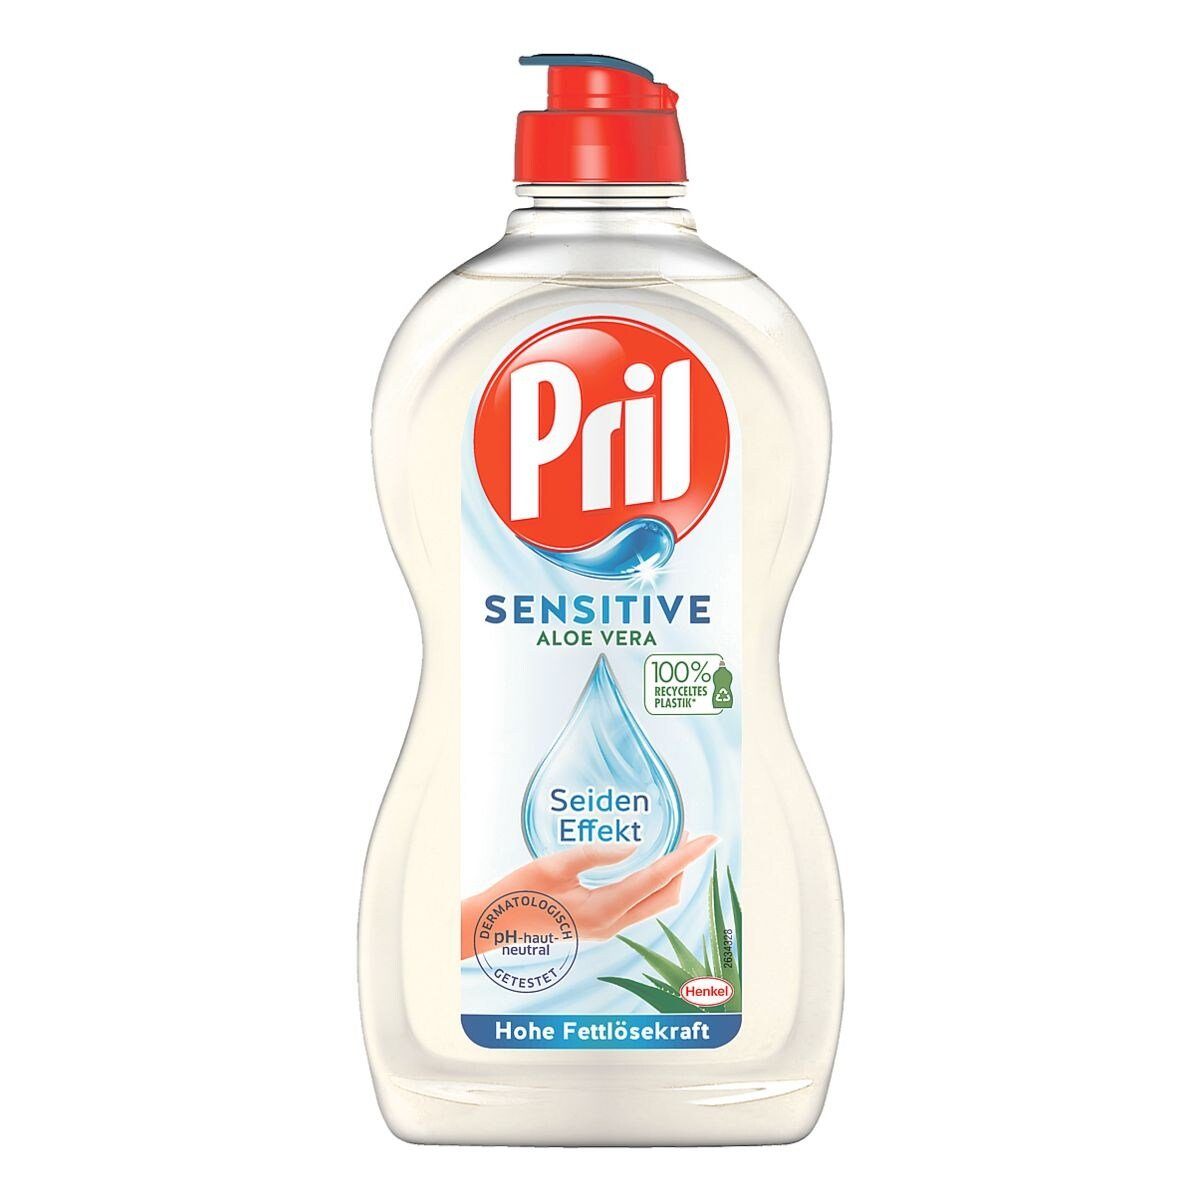 PRIL Sensitive Aloe Vera Geschirrspülmittel Fettlösekraft) / hohe ml, (450 hautschonend